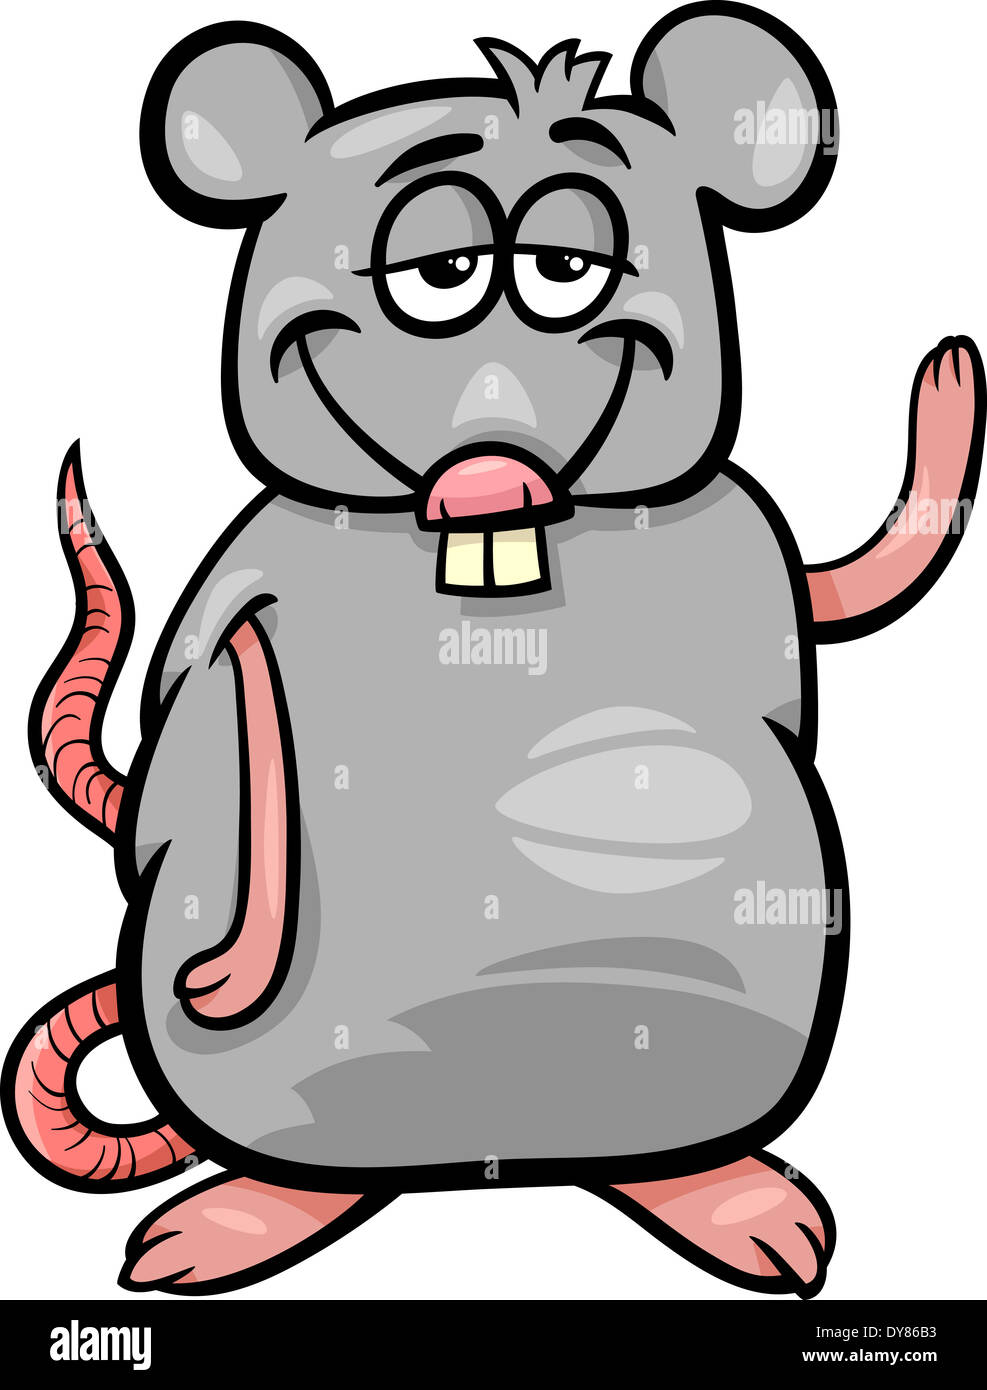 Cartoon Illustration of Funny Rat Character Stock Photo - Alamy